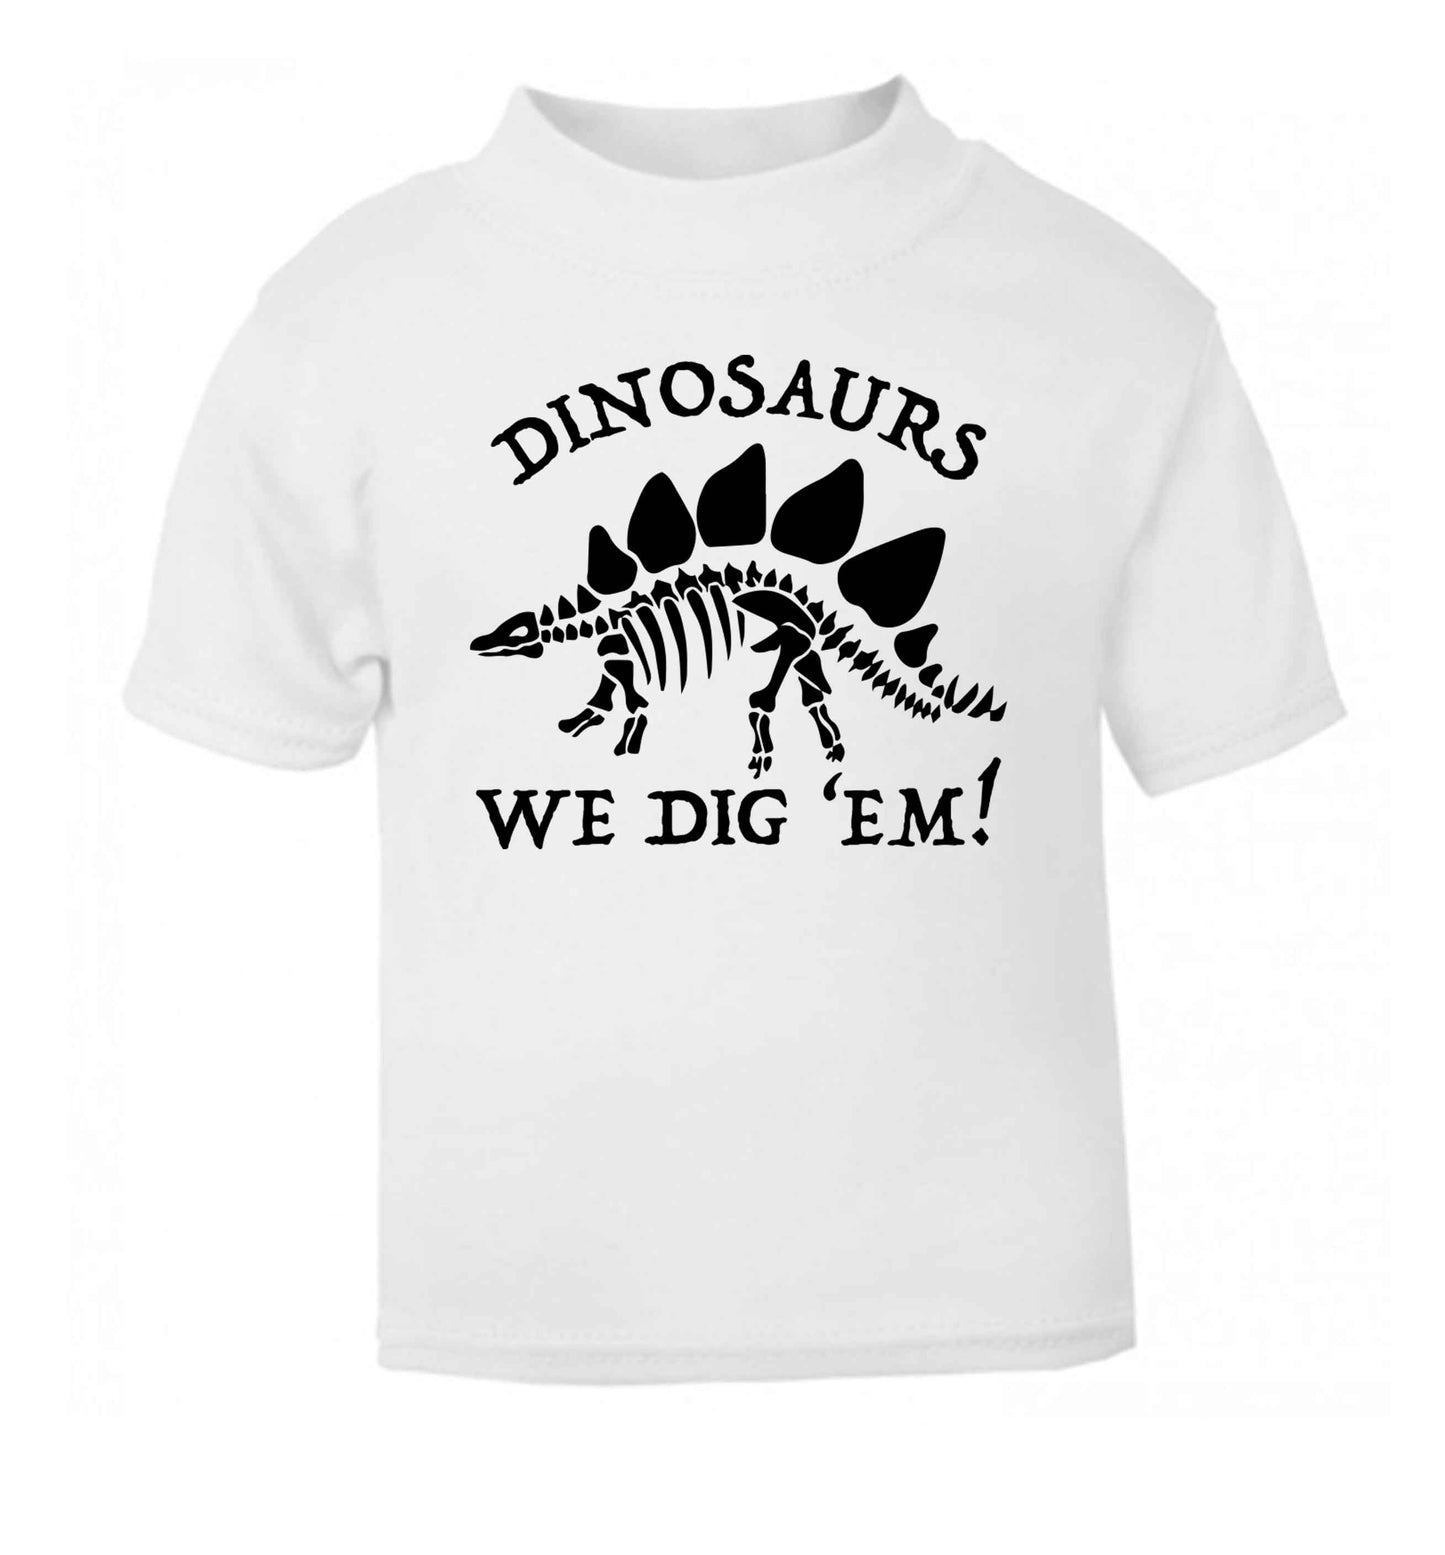 Dinosaurs we dig 'em! white Baby Toddler Tshirt 2 Years